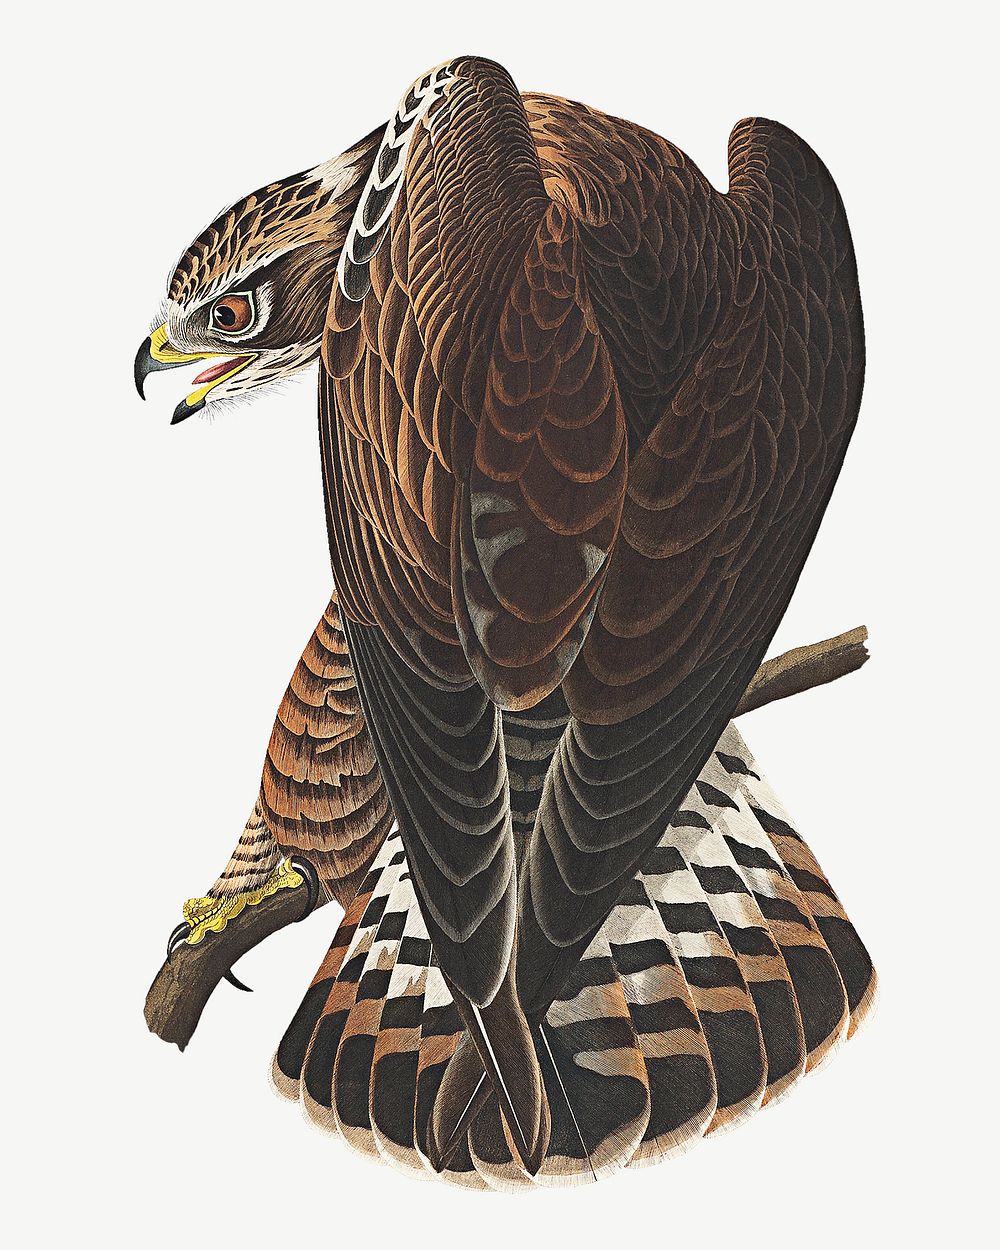 Rough-legged falcon bird, vintage animal collage element psd